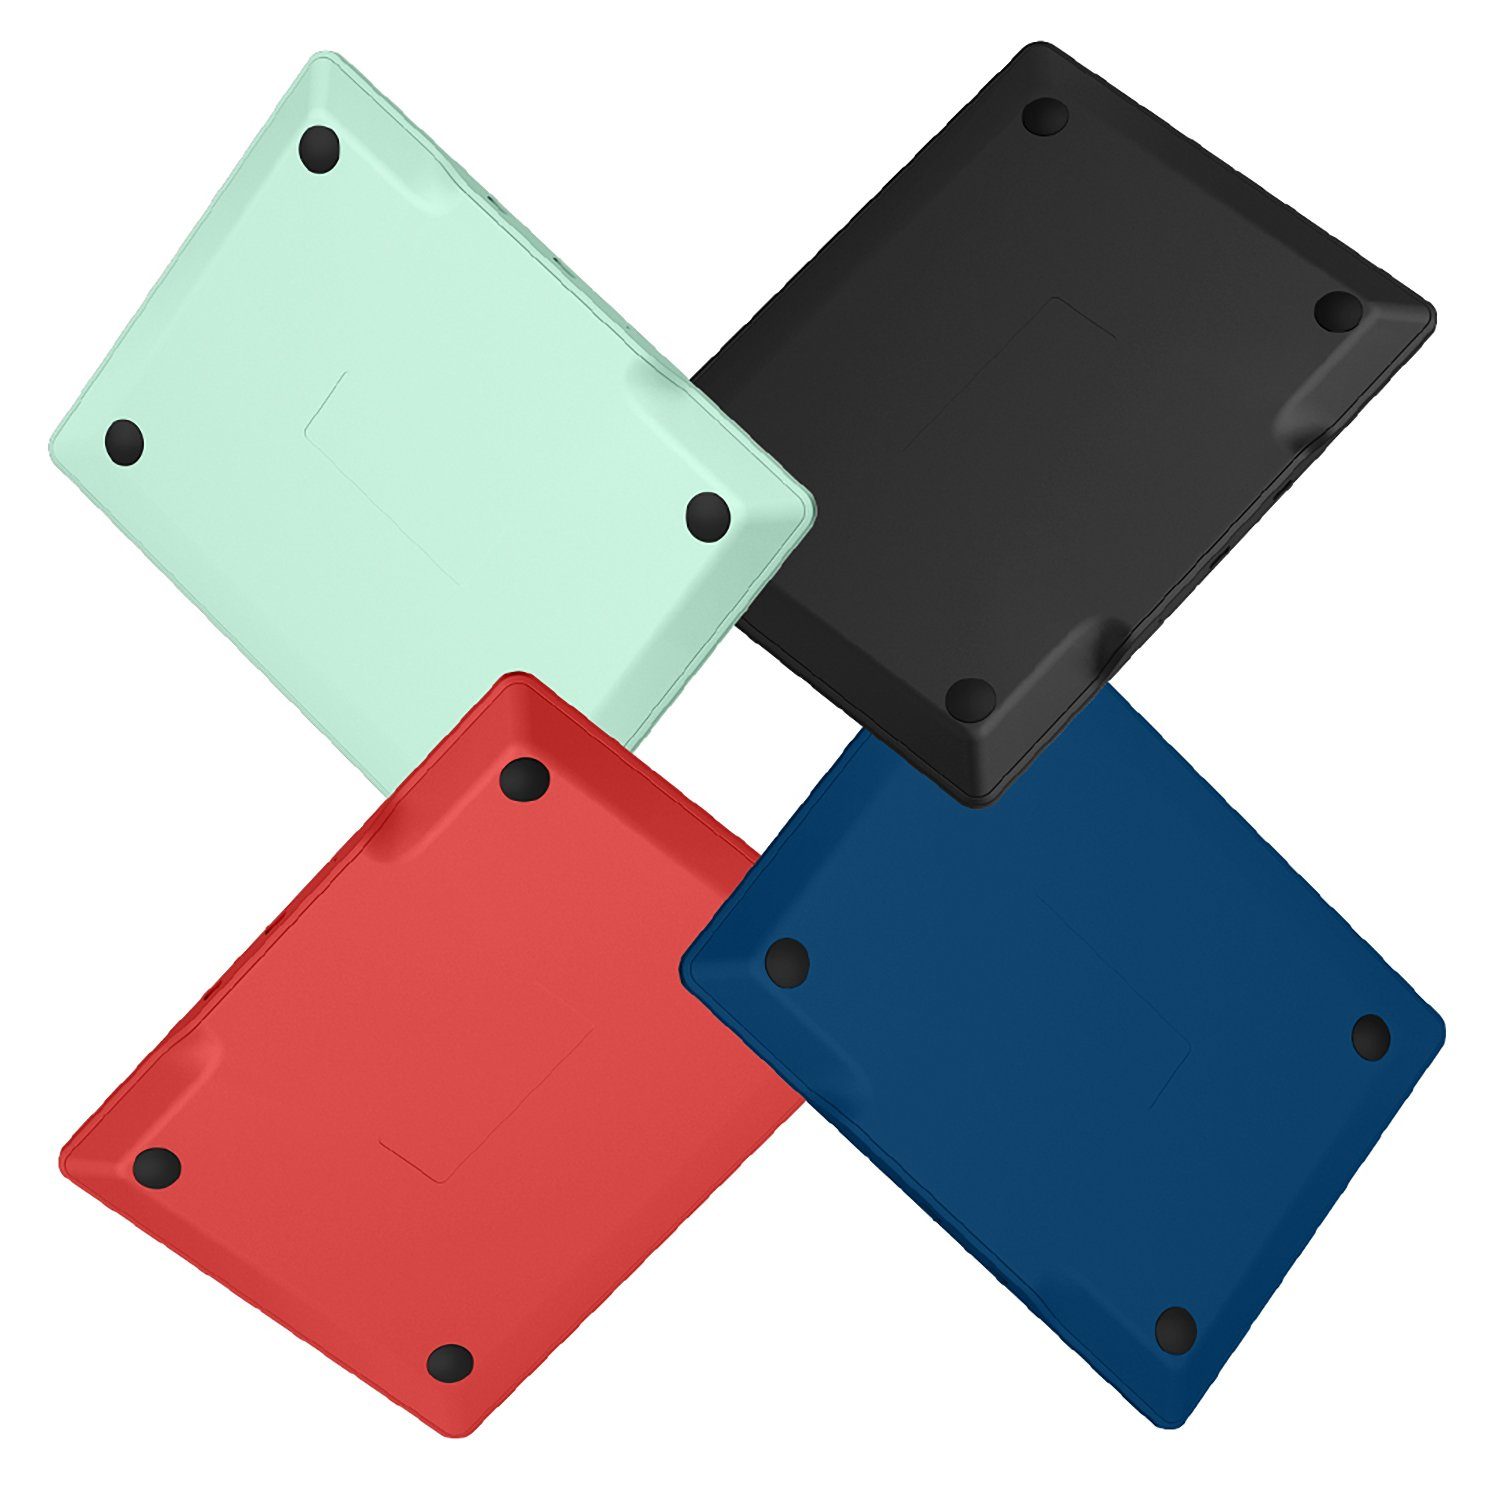 Deco XP-Pen XP-PEN für (12) Grün PC/Android/Chromebook Grafiktablett Grafiktablett Fun